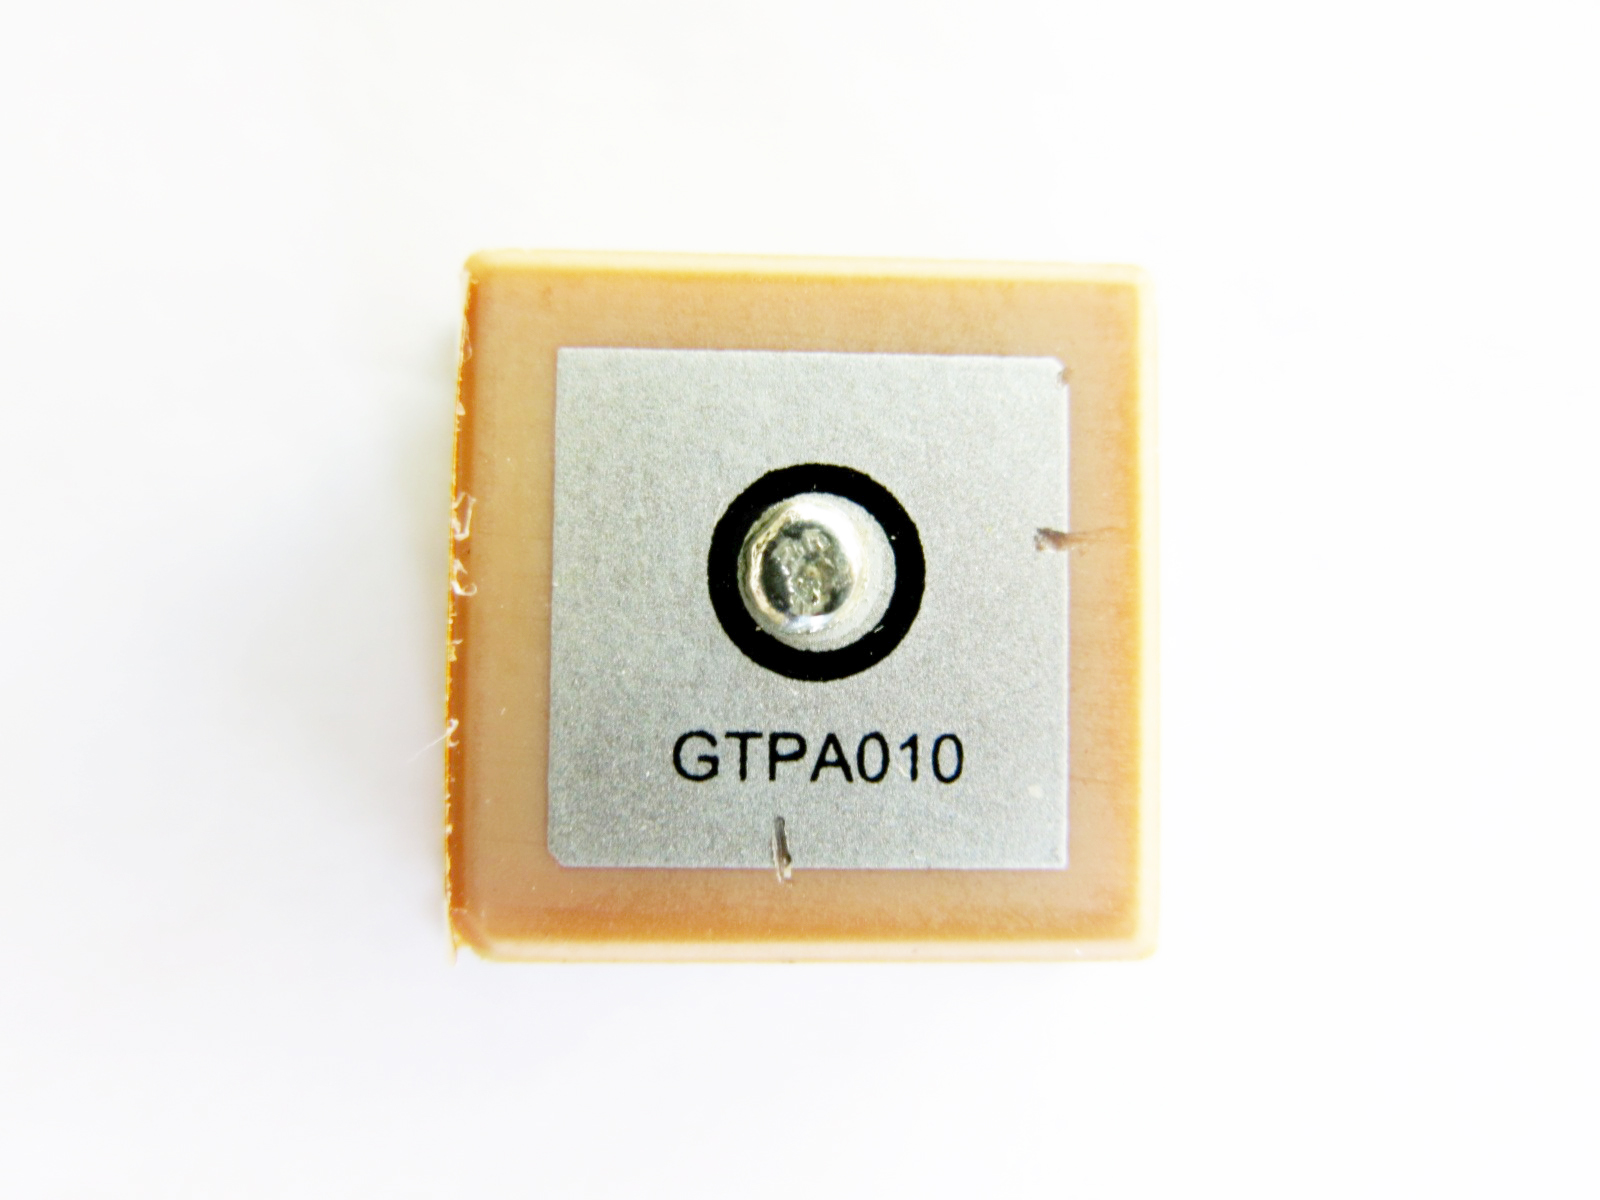 GTPA010 GPS Receiver with Embedded Antenna (FGPMMOPA6B)